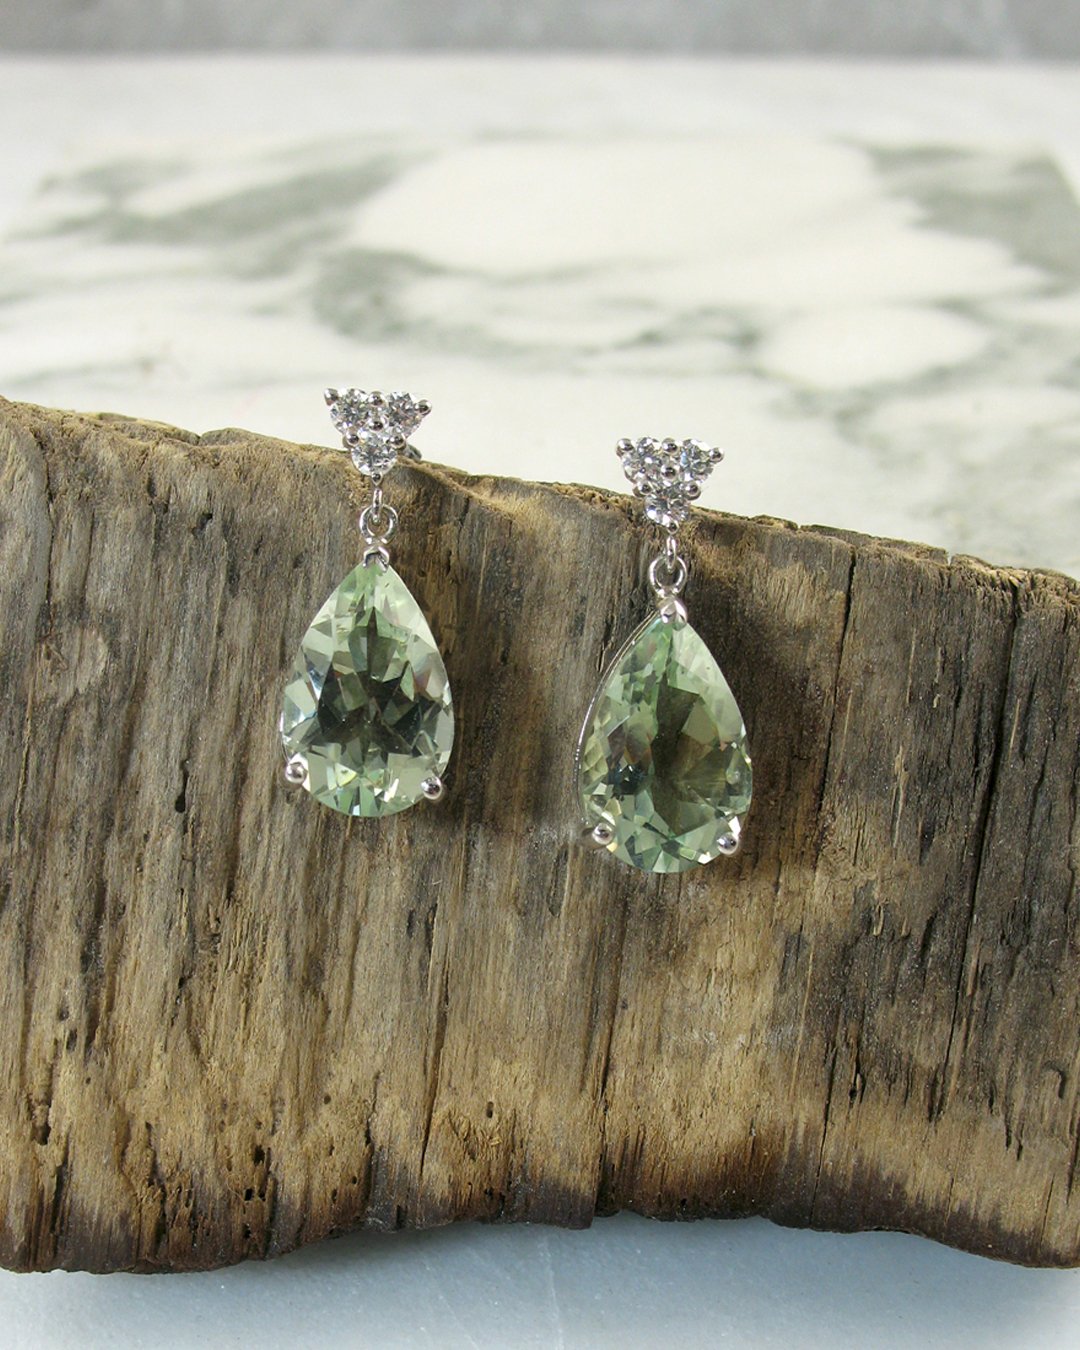 An elegant pair of diamond and green quartz drop earrings